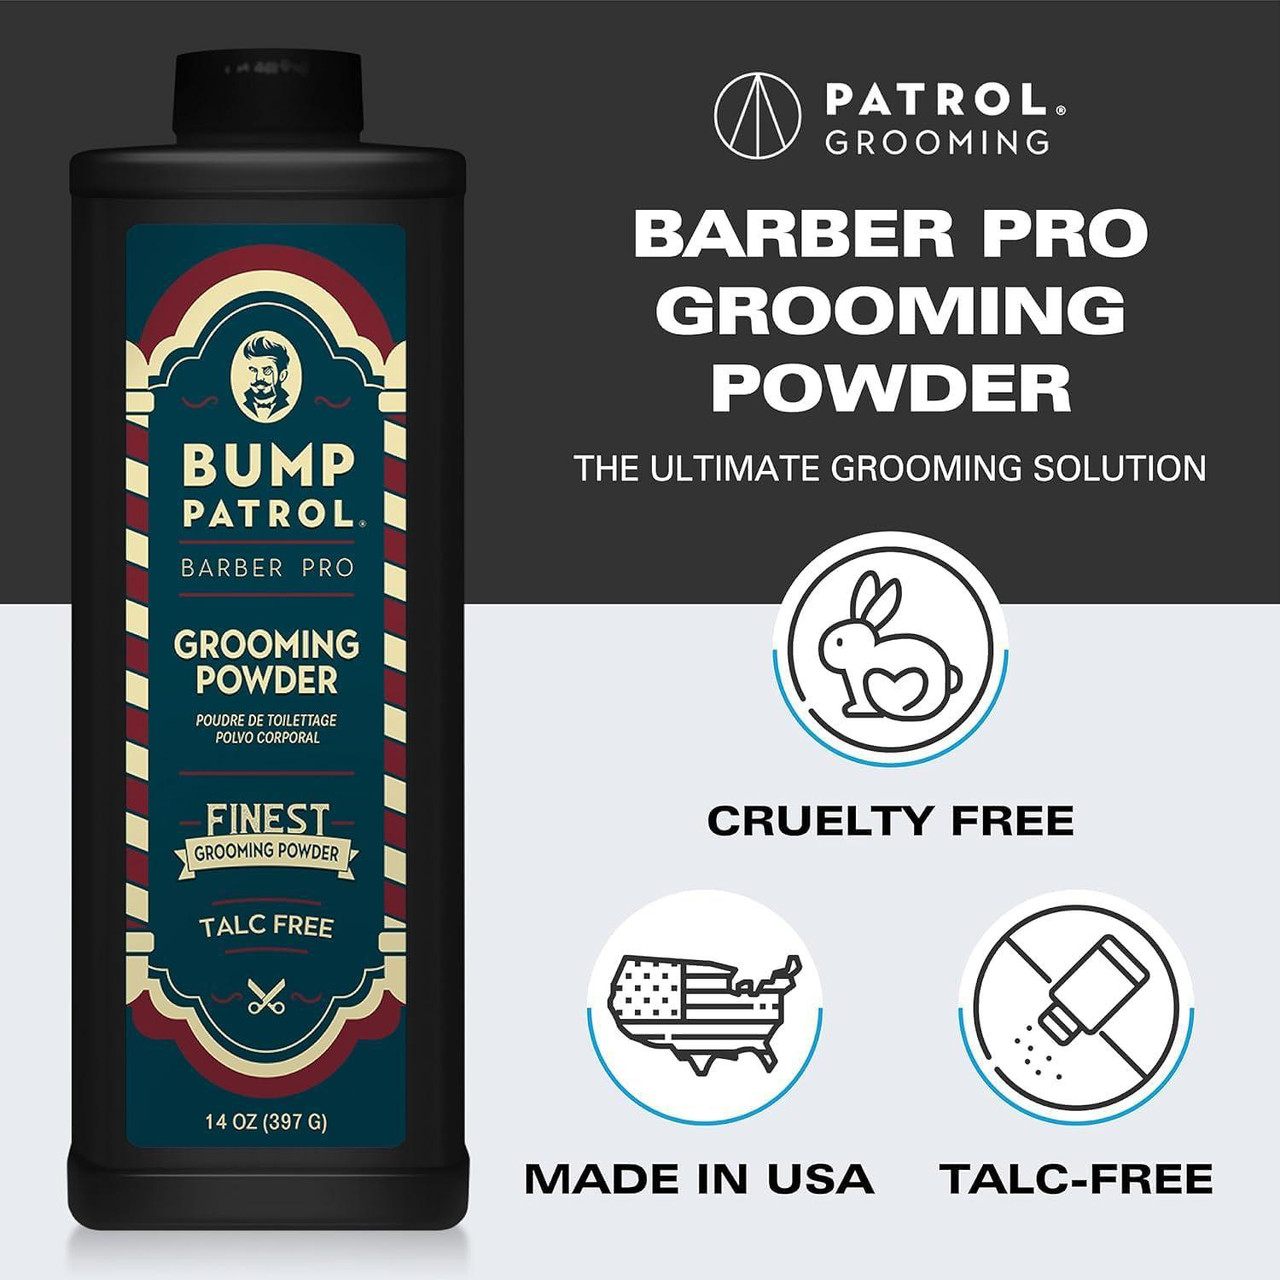 Bump Patrol Grooming Powder